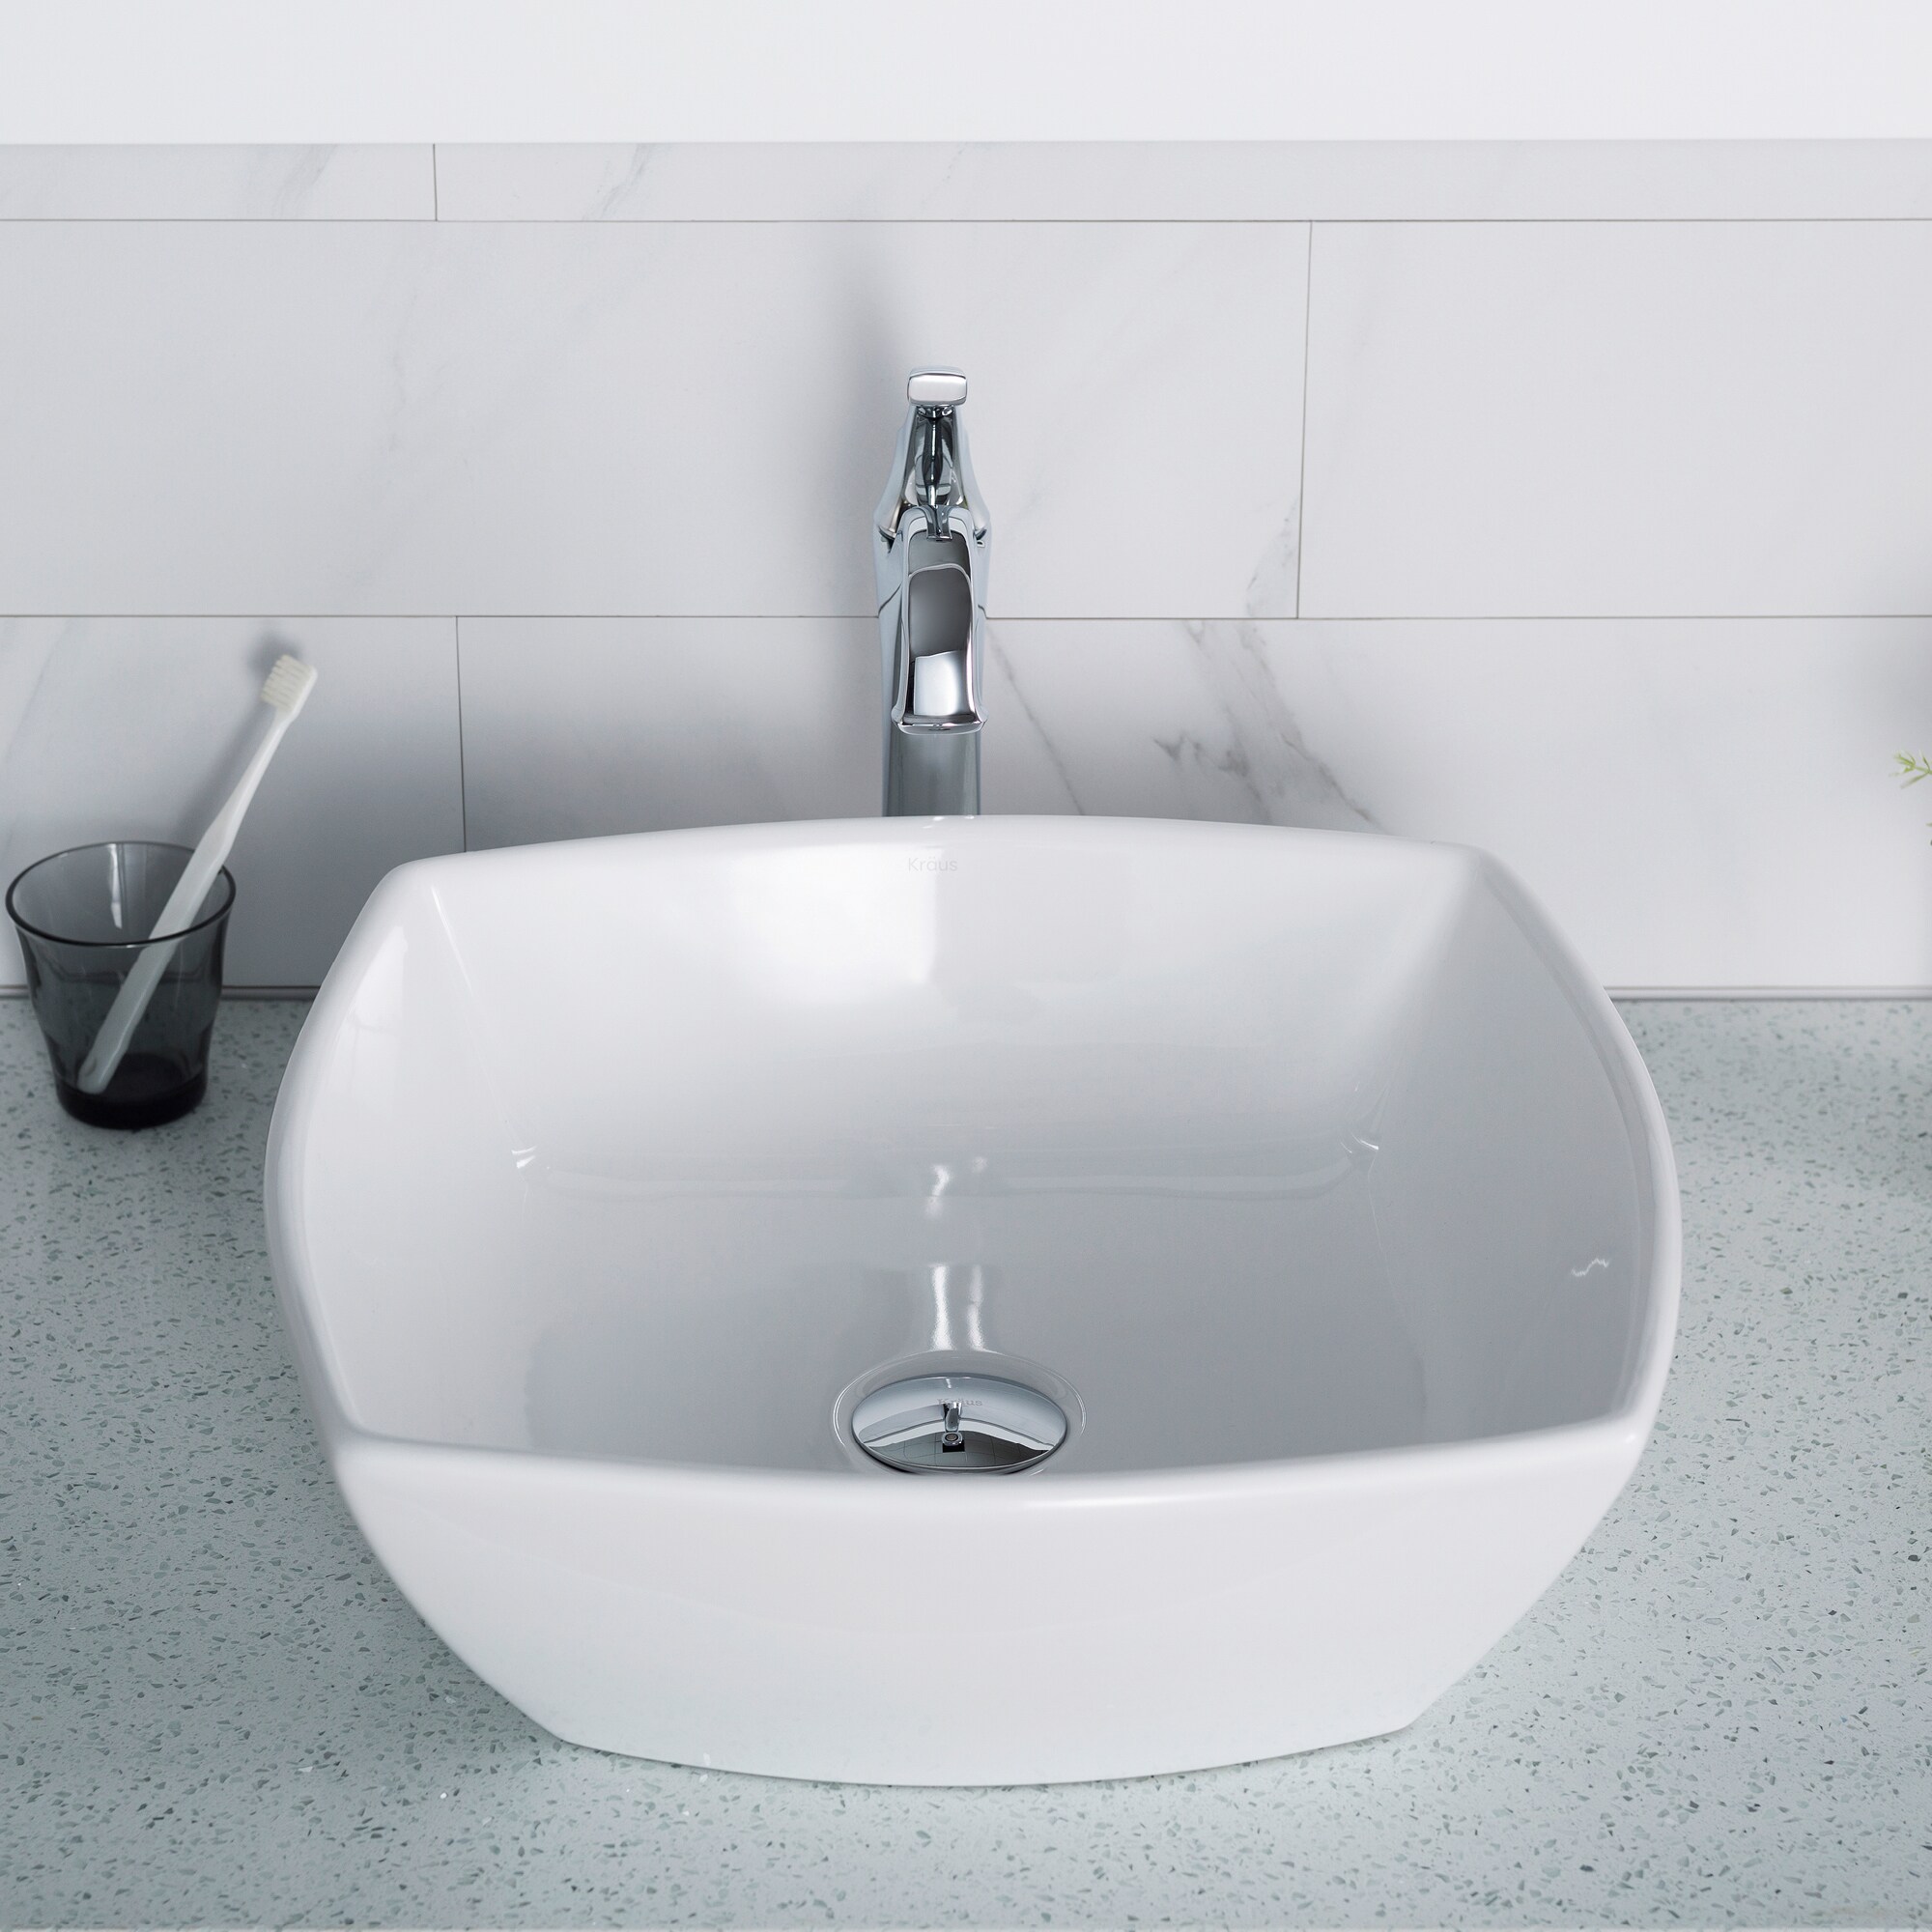 Kraus Elavo White Ceramic Vessel Square Modern Bathroom Sink (16.5-in x 16.5-in)